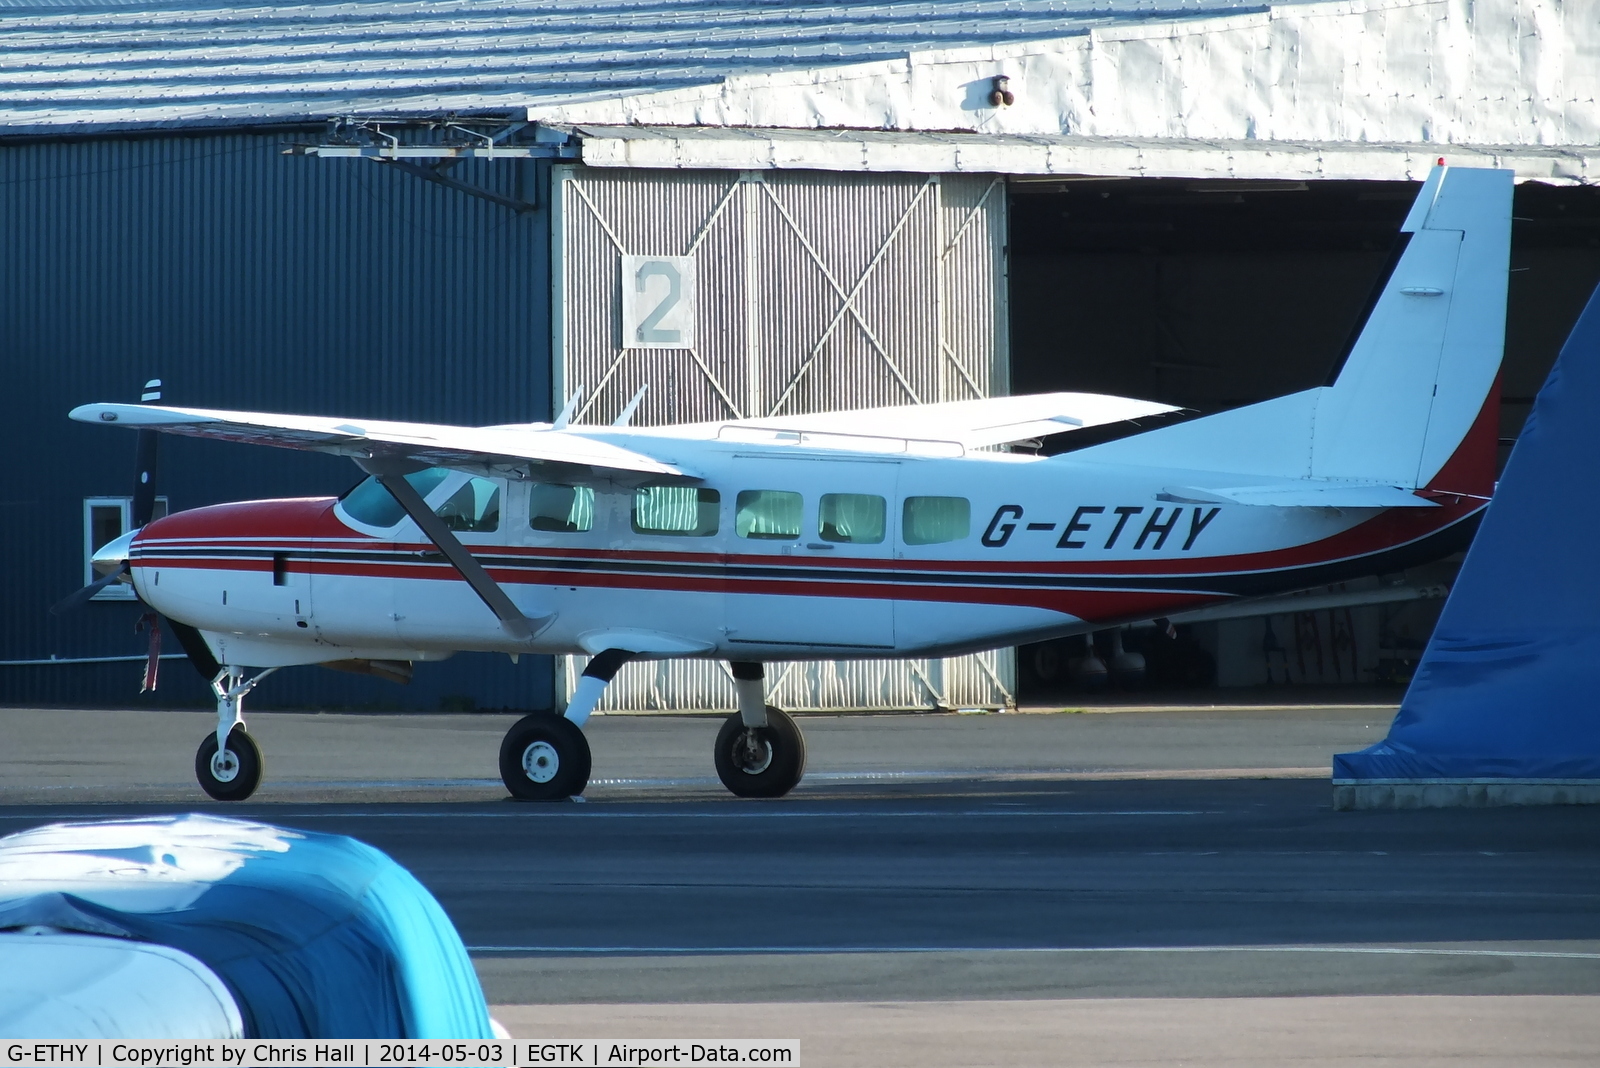 G-ETHY, 1998 Cessna 208 Caravan I C/N 20800293, at Oxford Airport